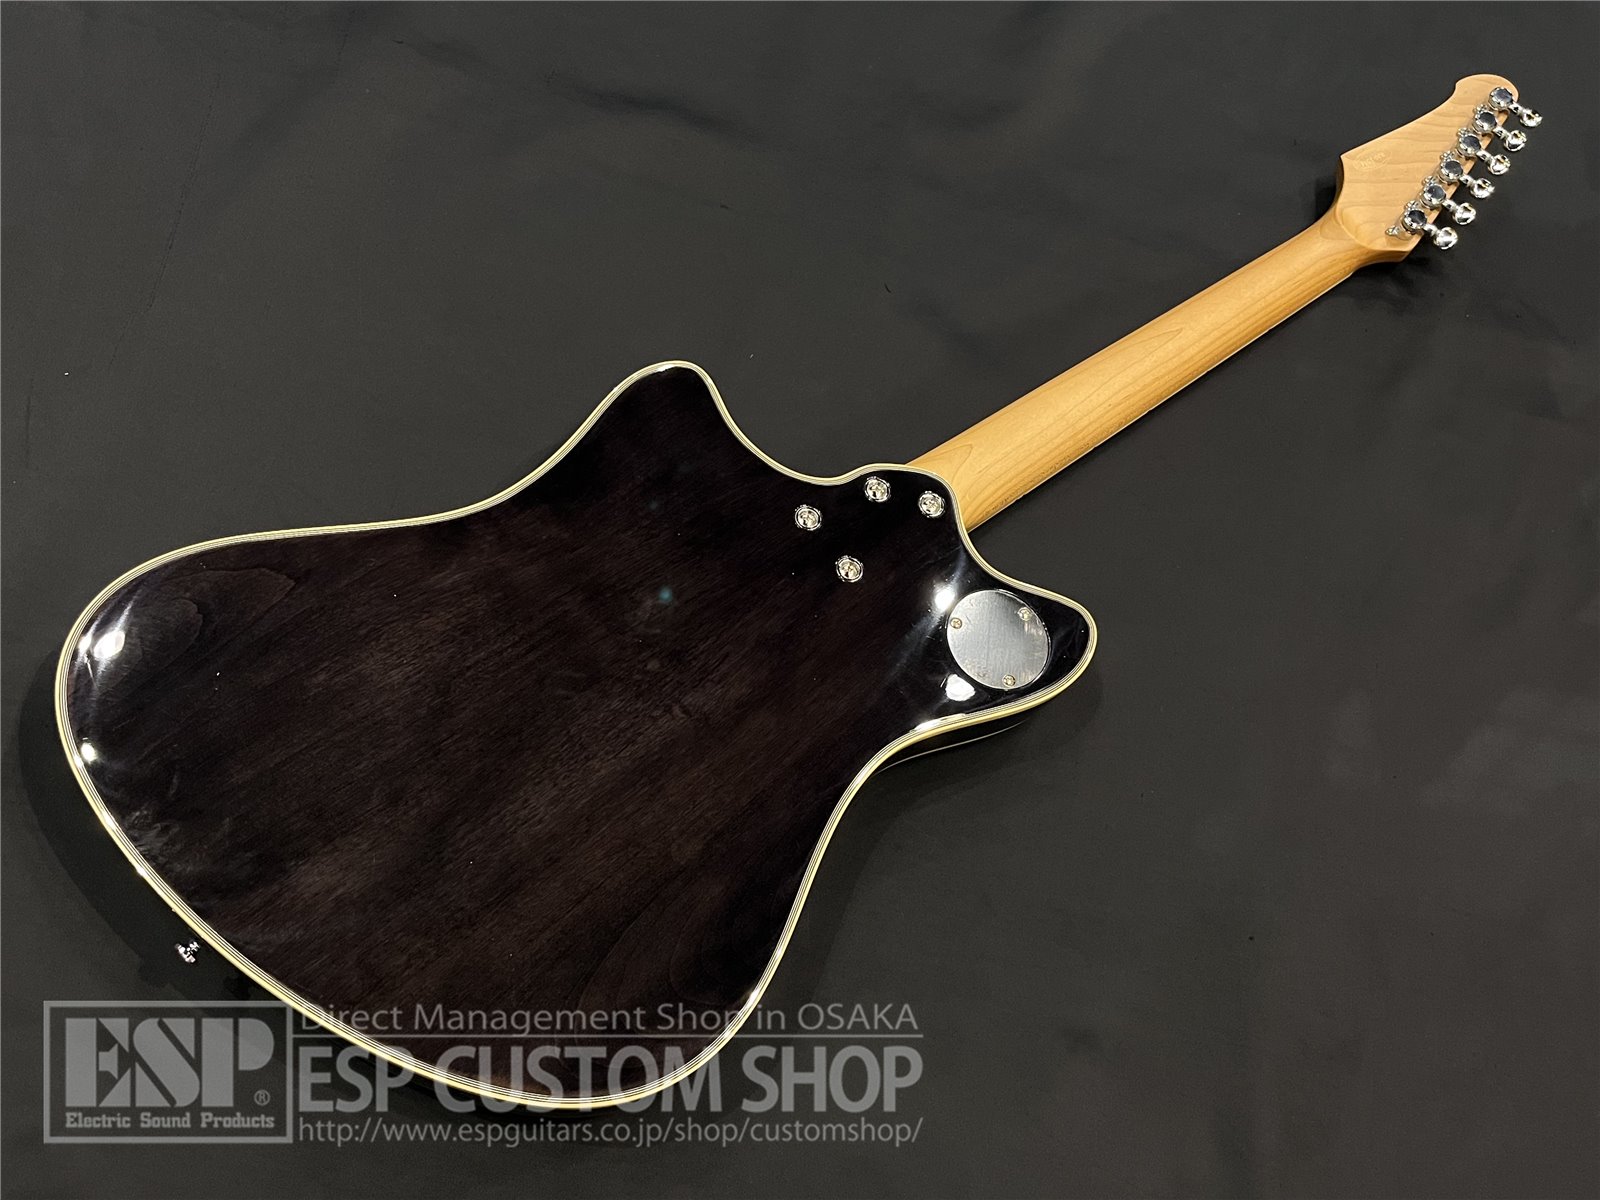 【即納可能】Balaguer Guitars Espada Ambient Select Gloss / See Through Black 大阪店